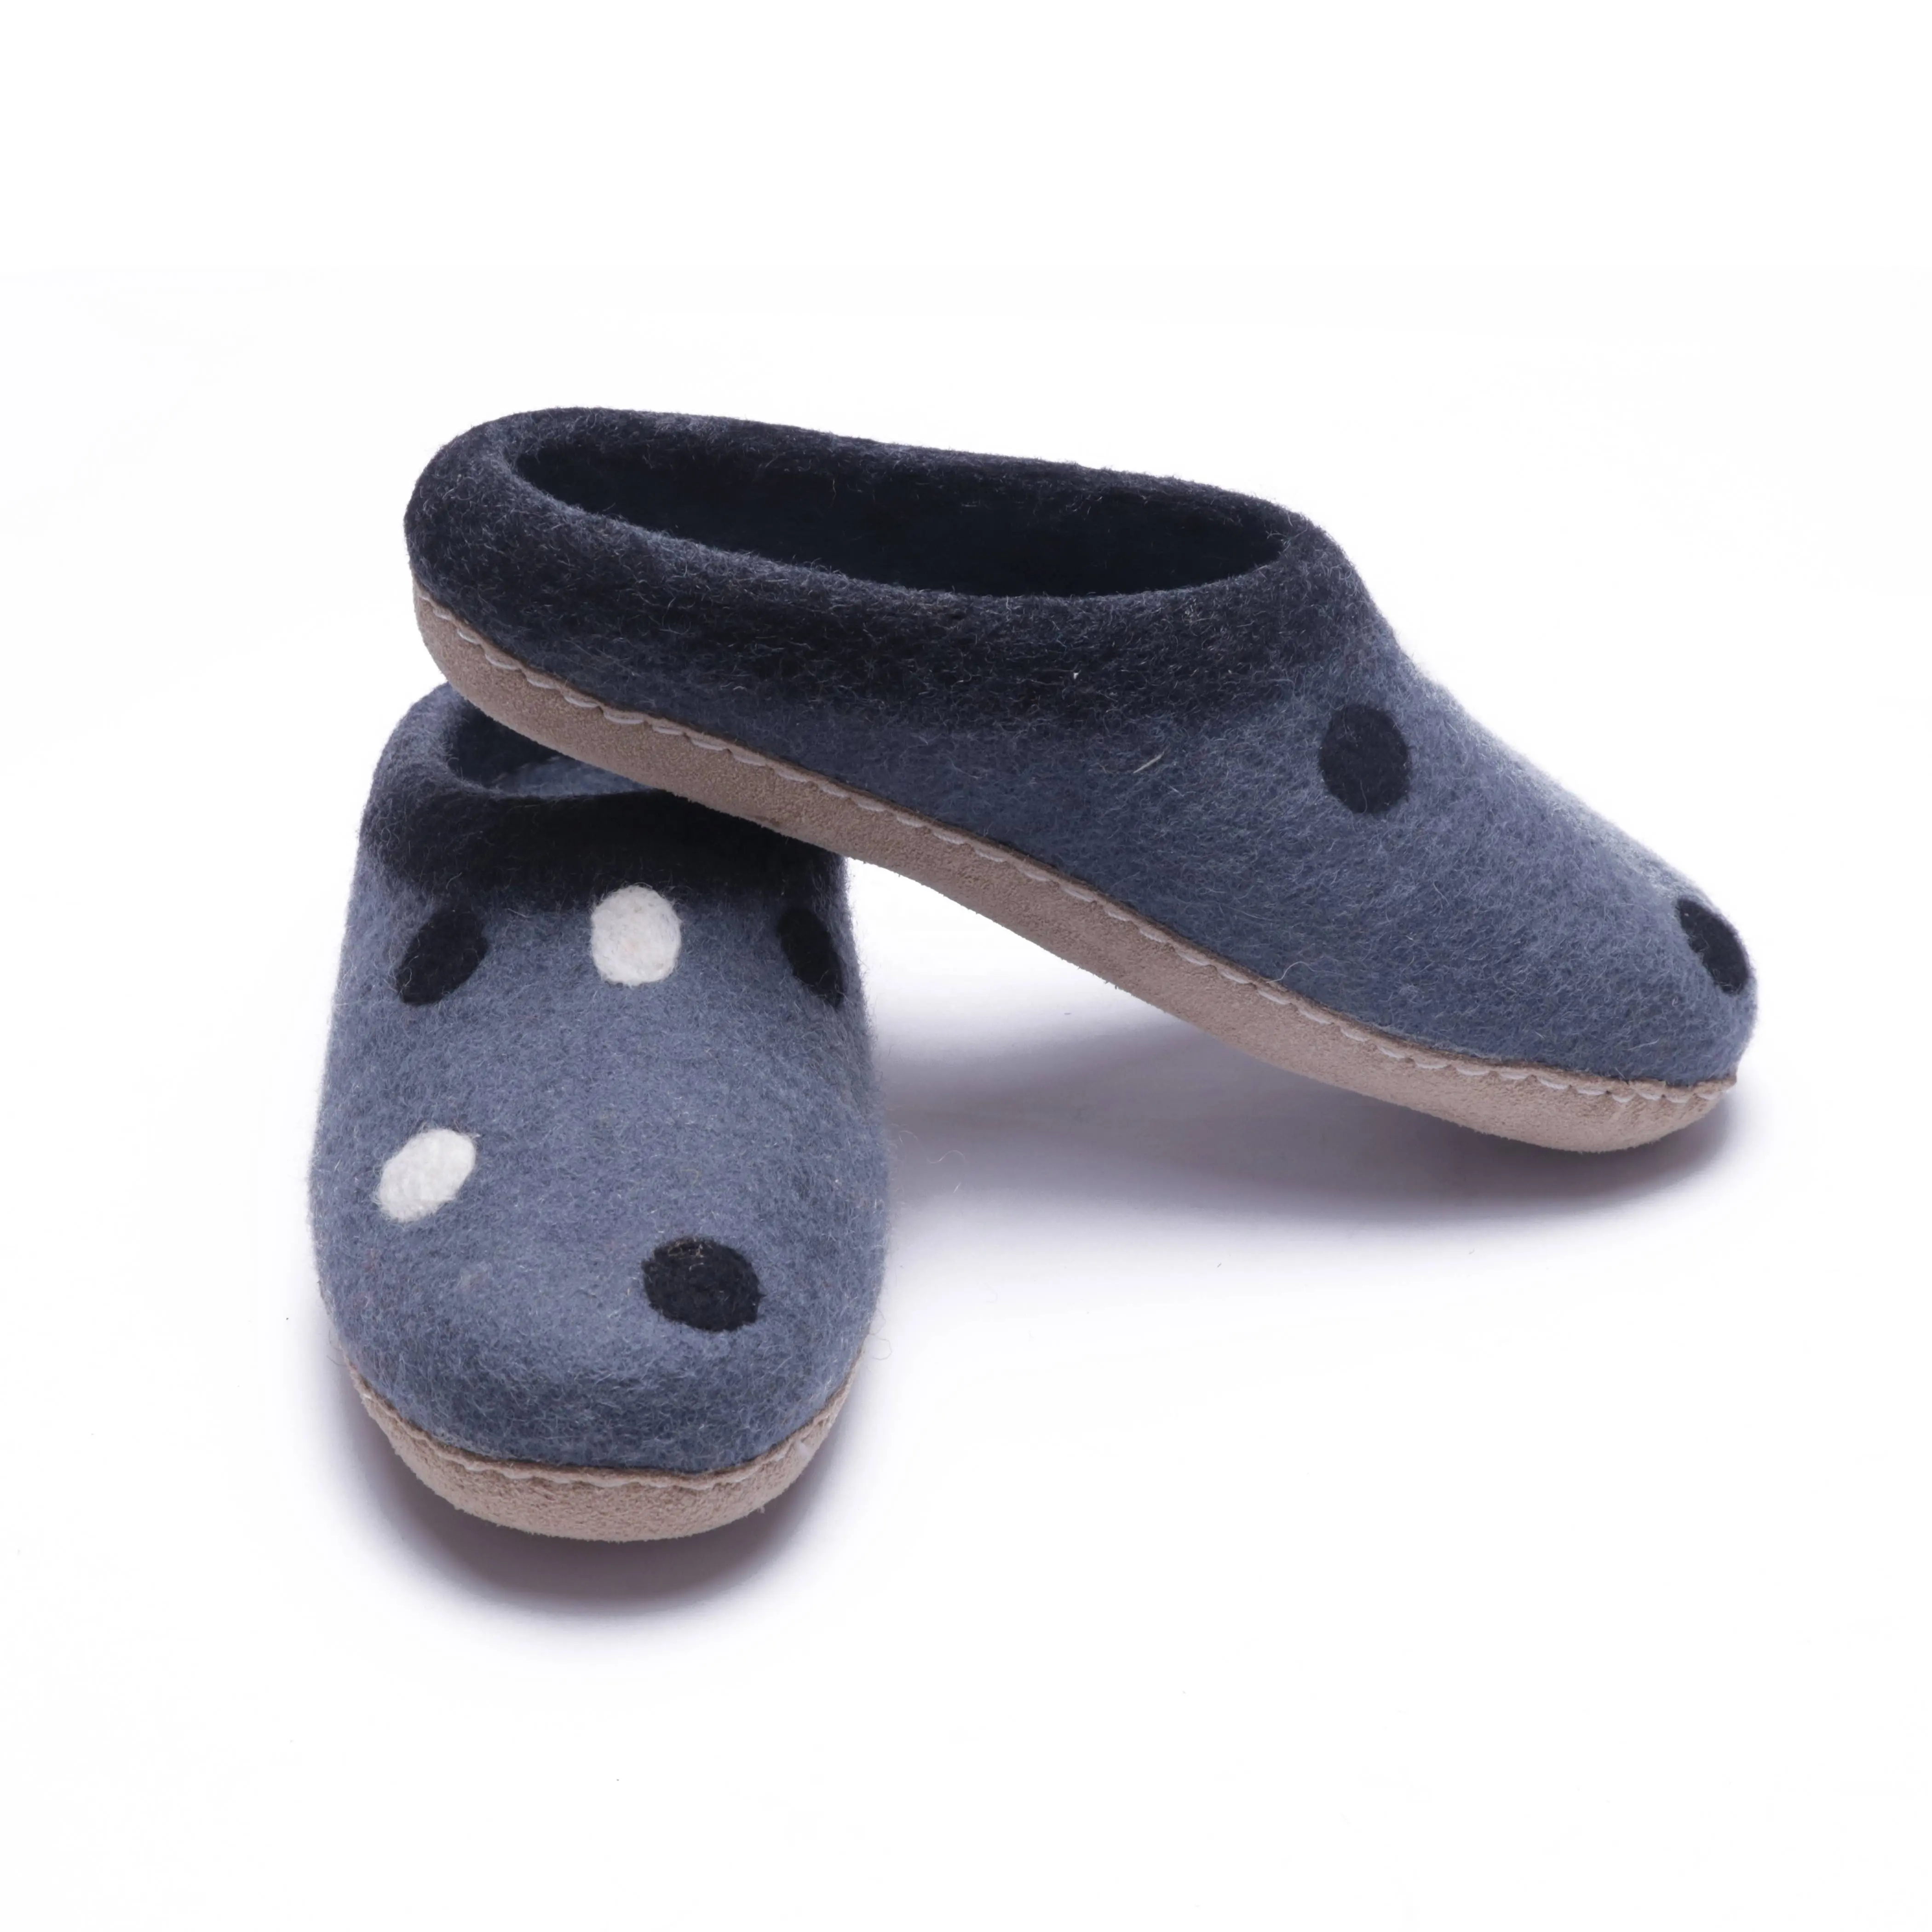 Top Selling Best handmade Felt Slippers merino wool indoor wears Unisex shoes anti slippery